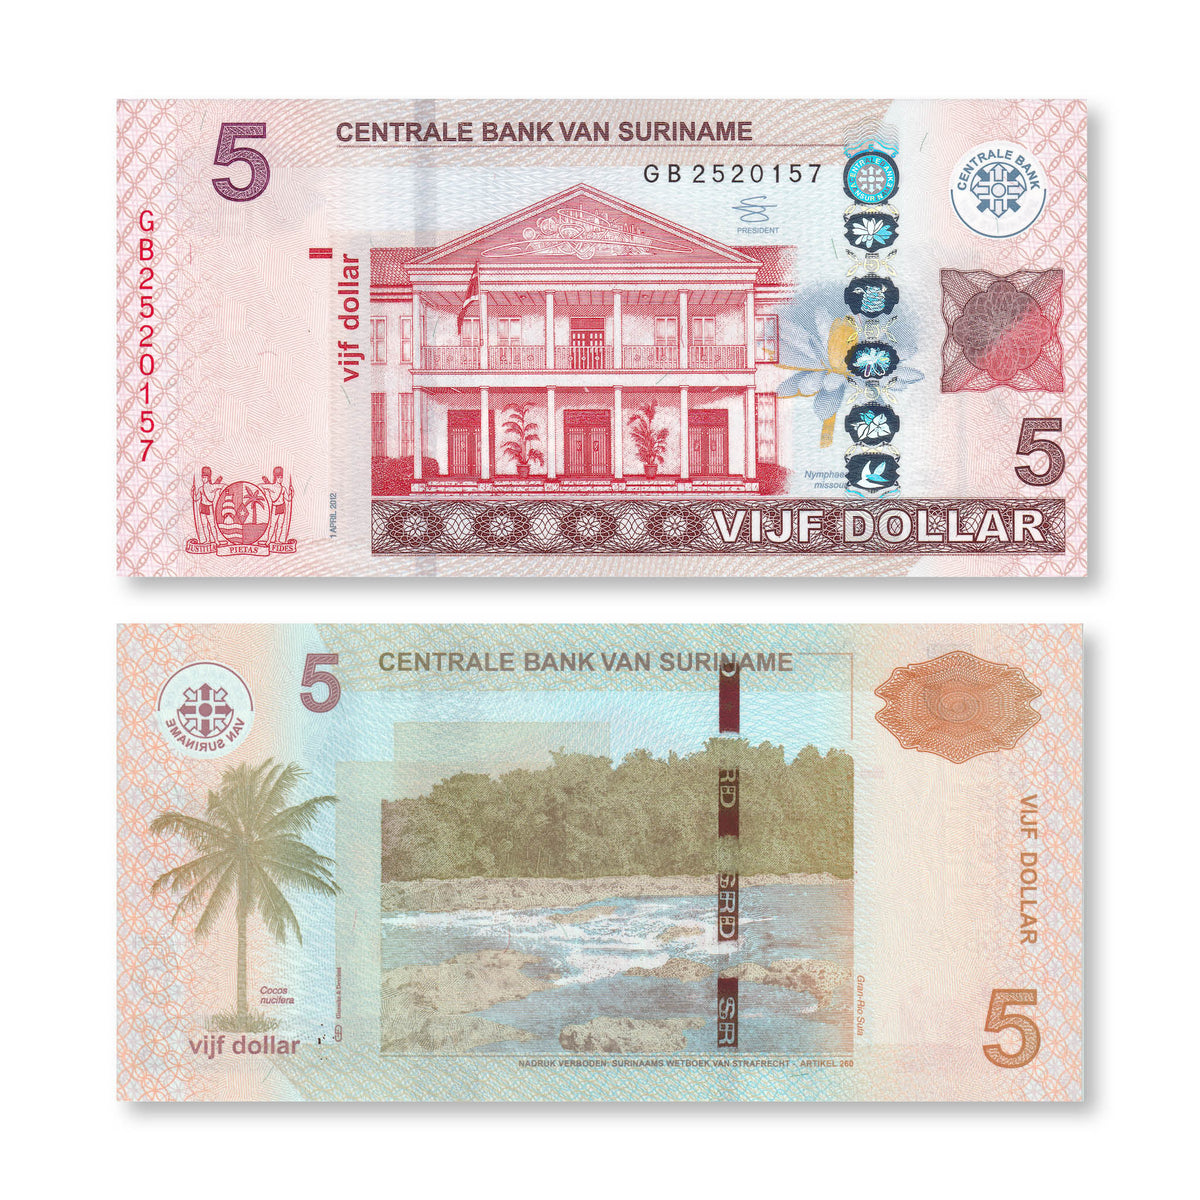 Suriname 5 Dollars, 2012, B545b, P162b, UNC - Robert's World Money - World Banknotes